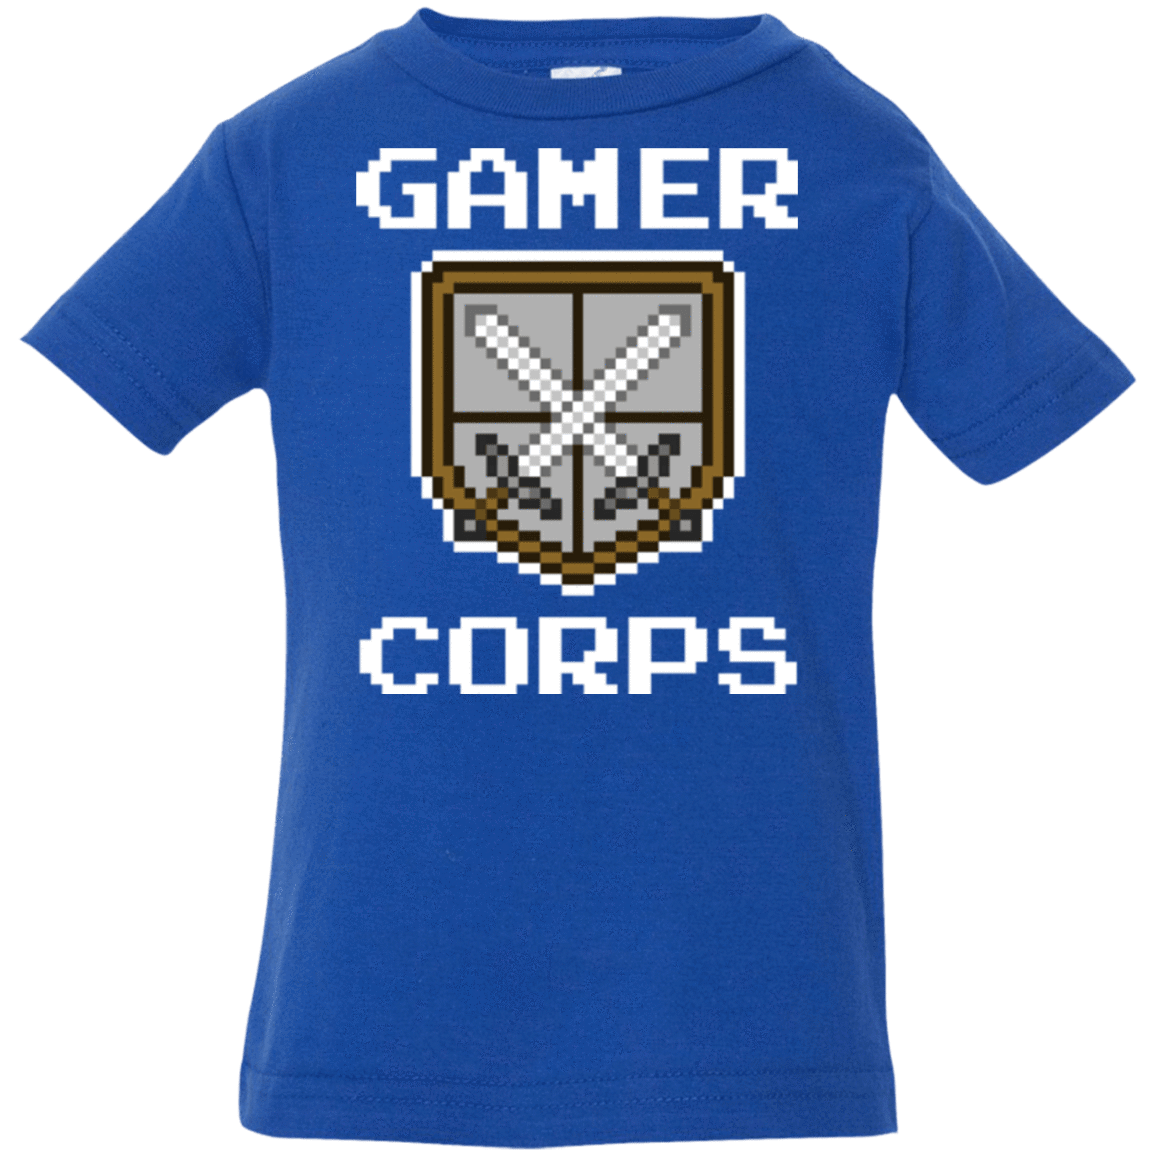 T-Shirts Royal / 6 Months Gamer corps Infant Premium T-Shirt